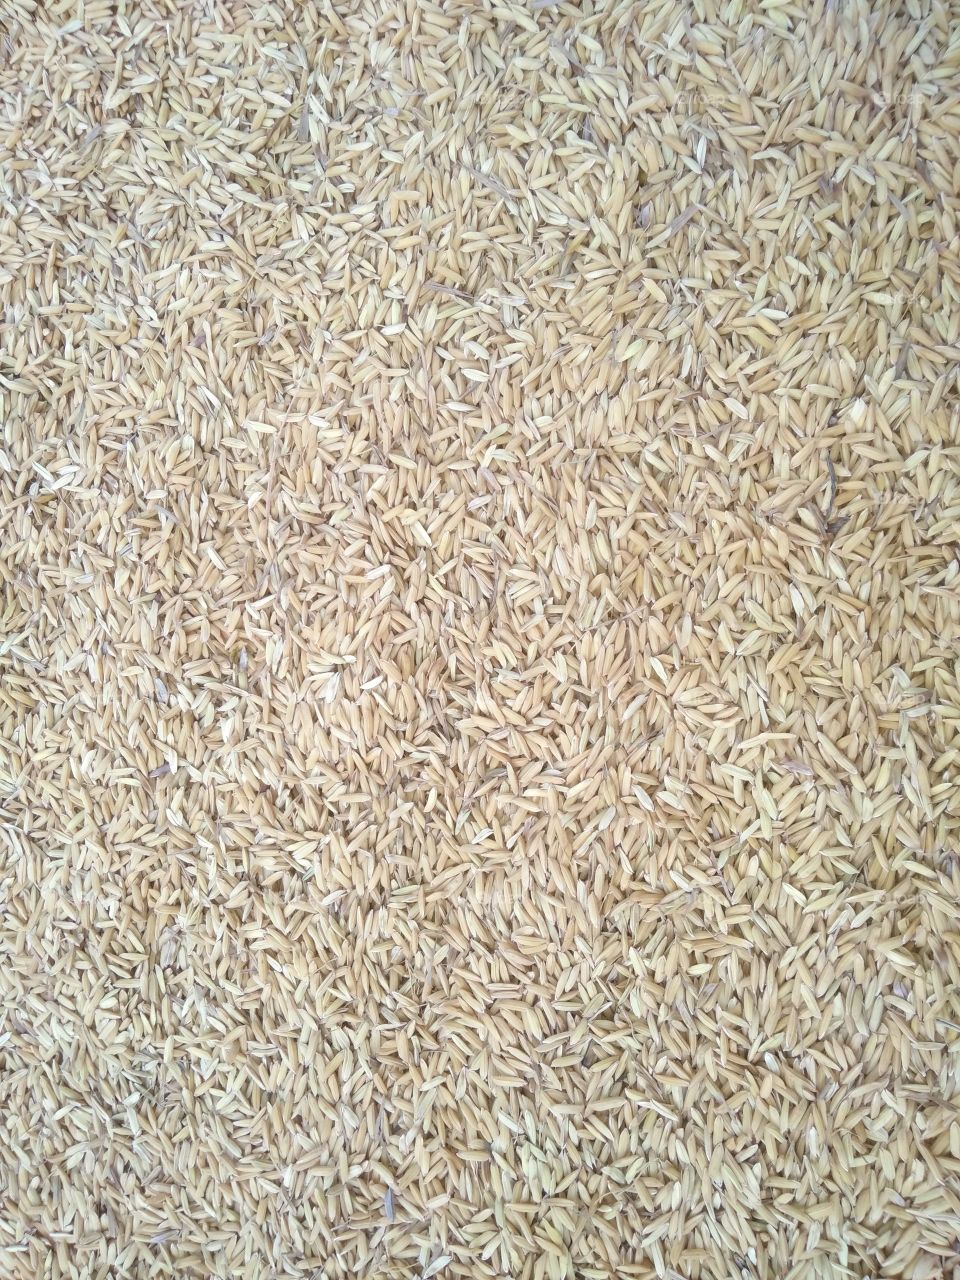 rice grain